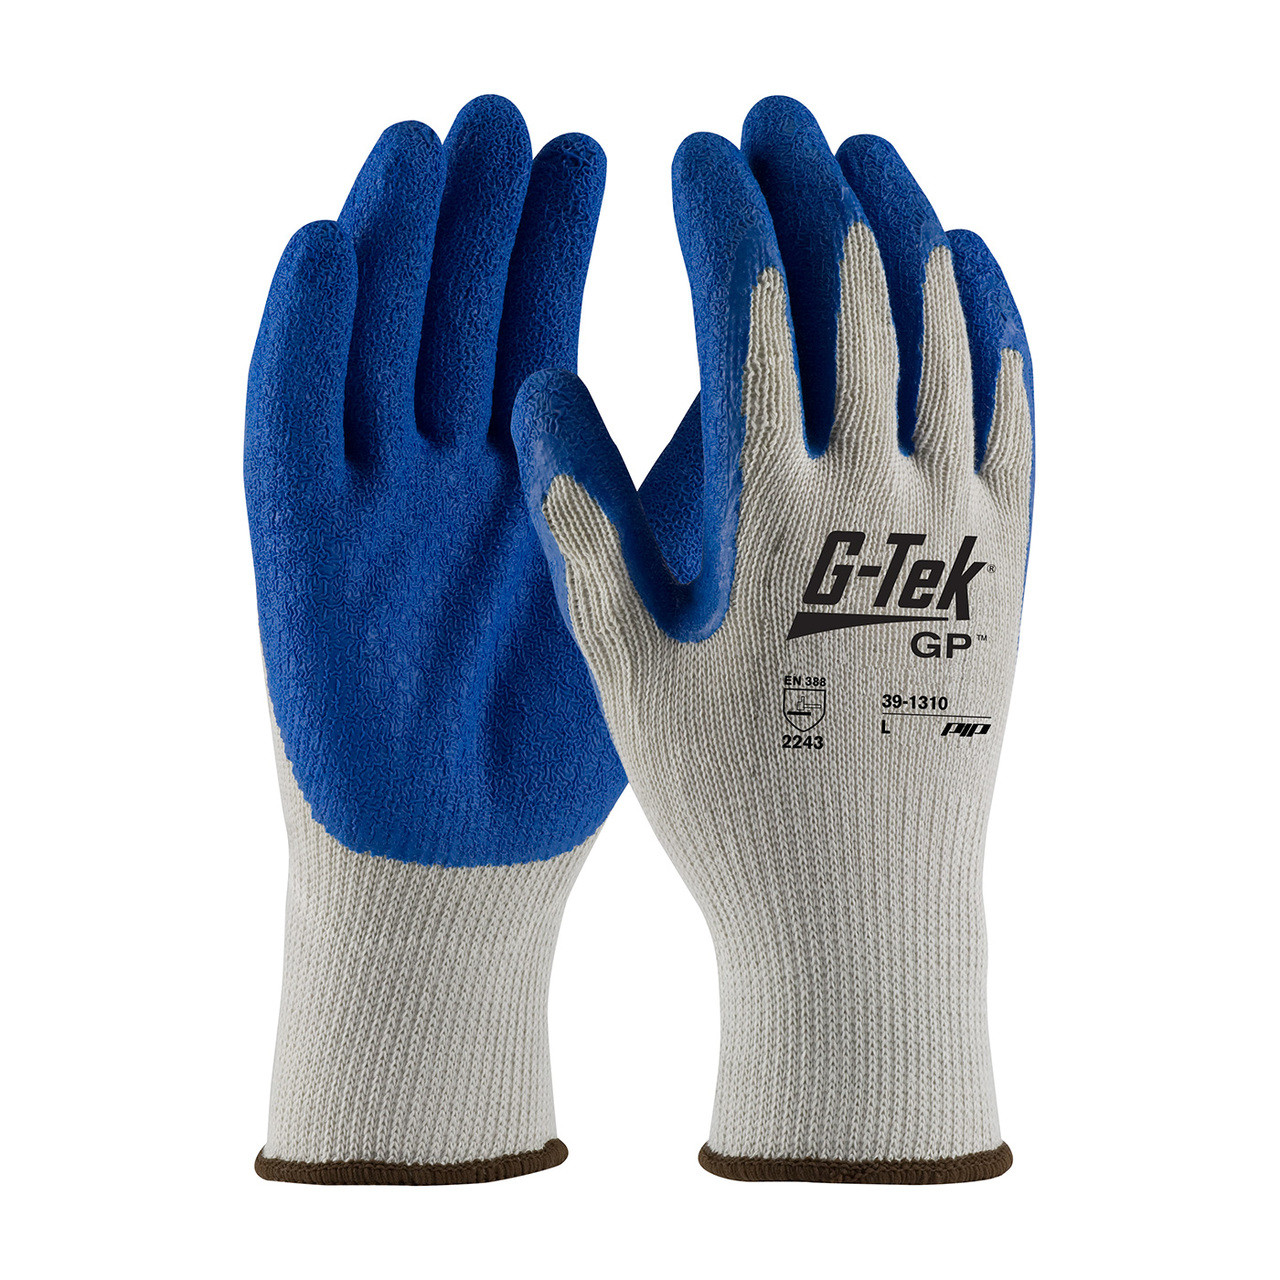 G Tek Gp Gloves 39 1310 12 Pairs Hsg Safety Supplies Inc 4026